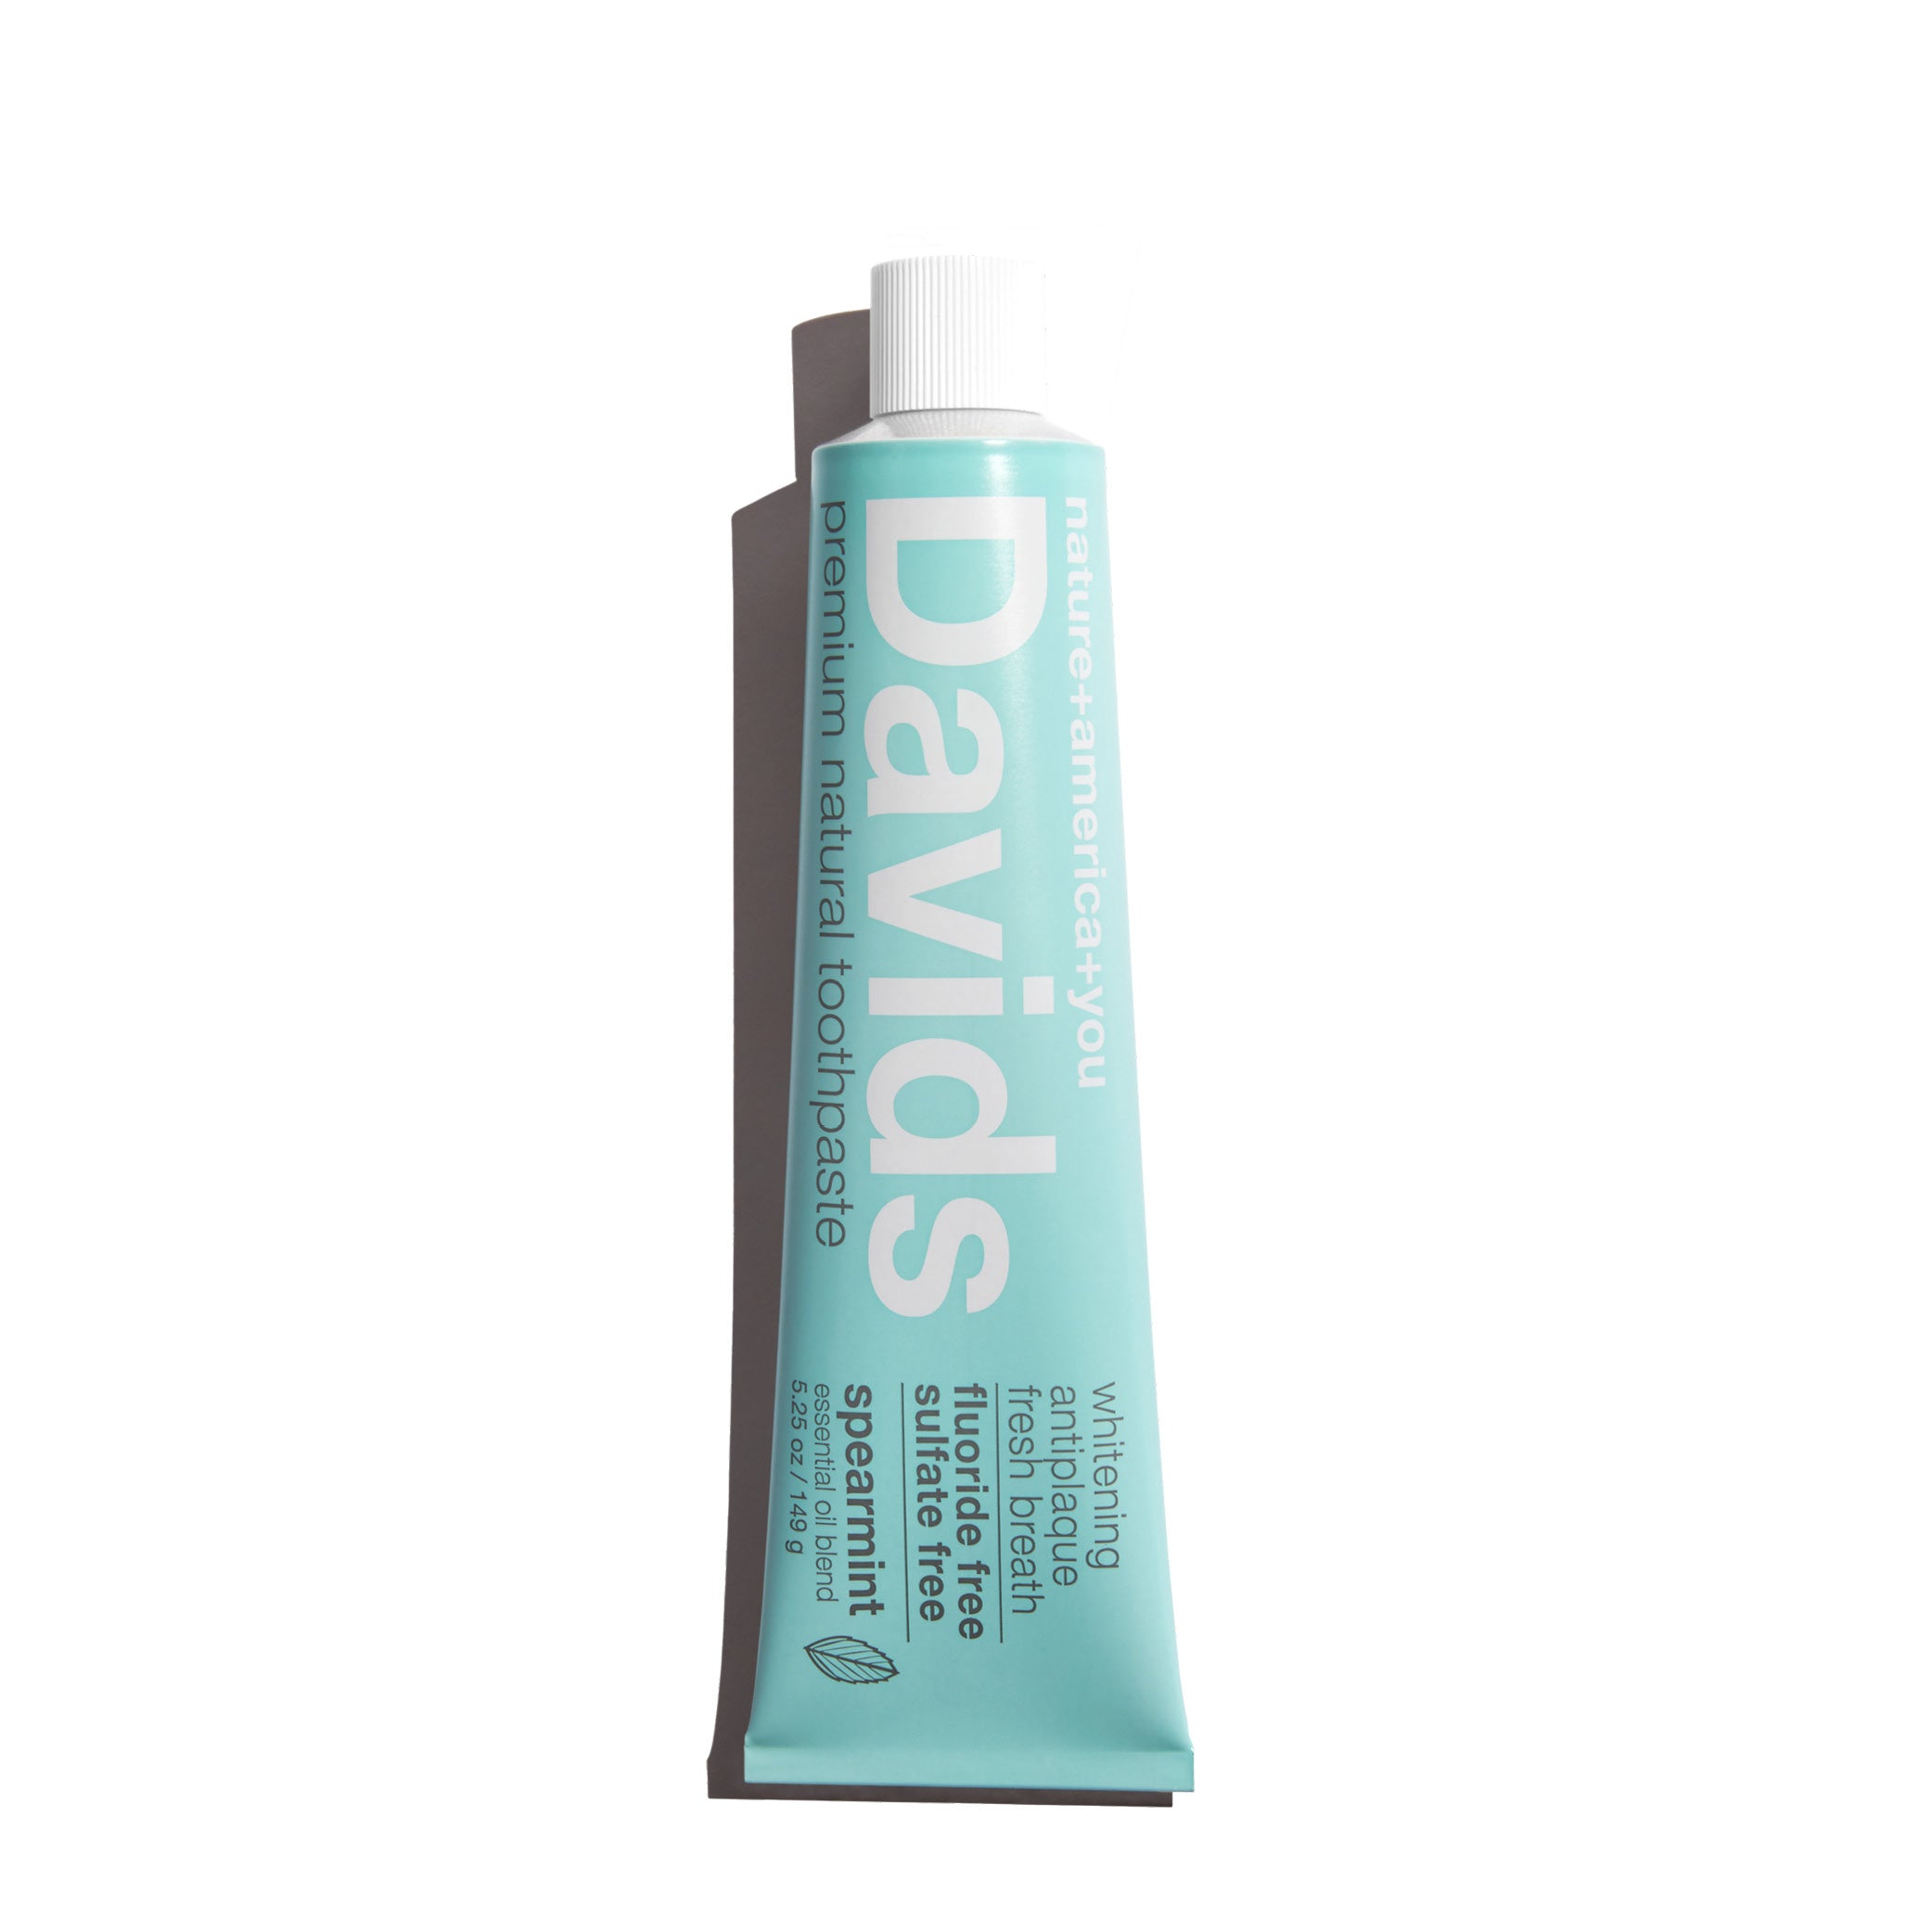 Davids Premium Toothpaste / Spearmint